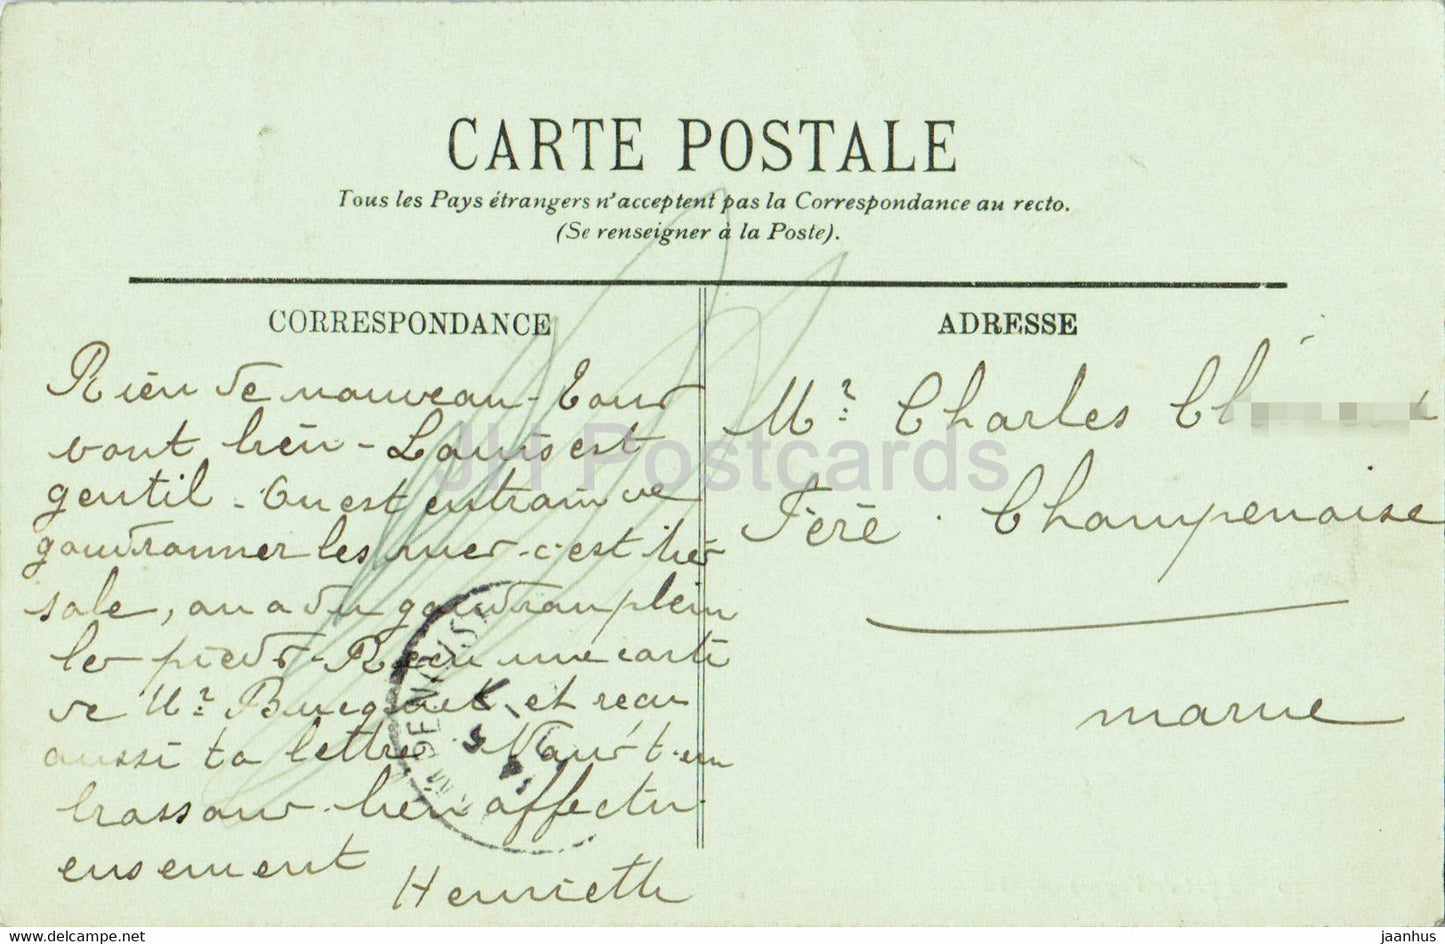 Effet de Vagues – 29 – LL – alte Postkarte – 1909 – Frankreich – gebraucht